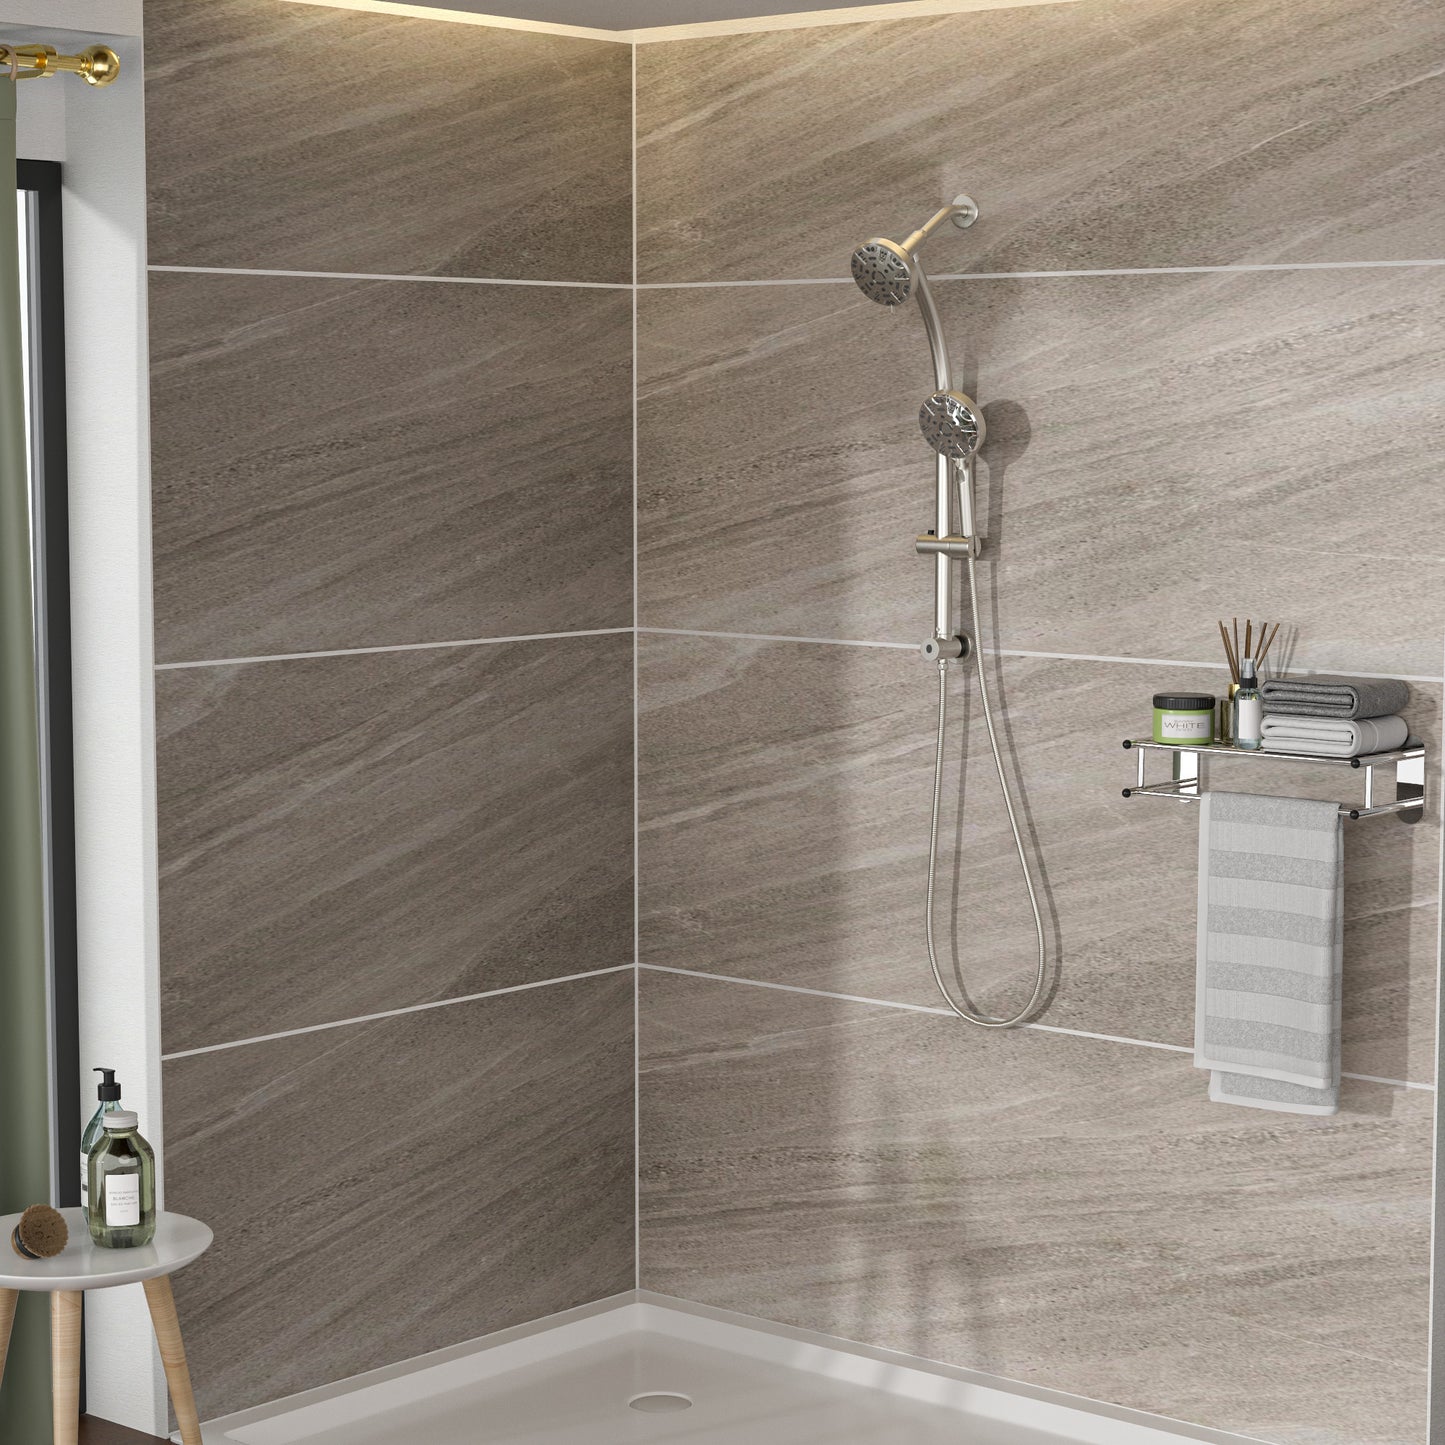 Multi Function Dual Shower Head - Shower System with 4.7" Rain Showerhead, 8-Function Hand Shower, Adjustable Slide Bar,Brushed Nickel